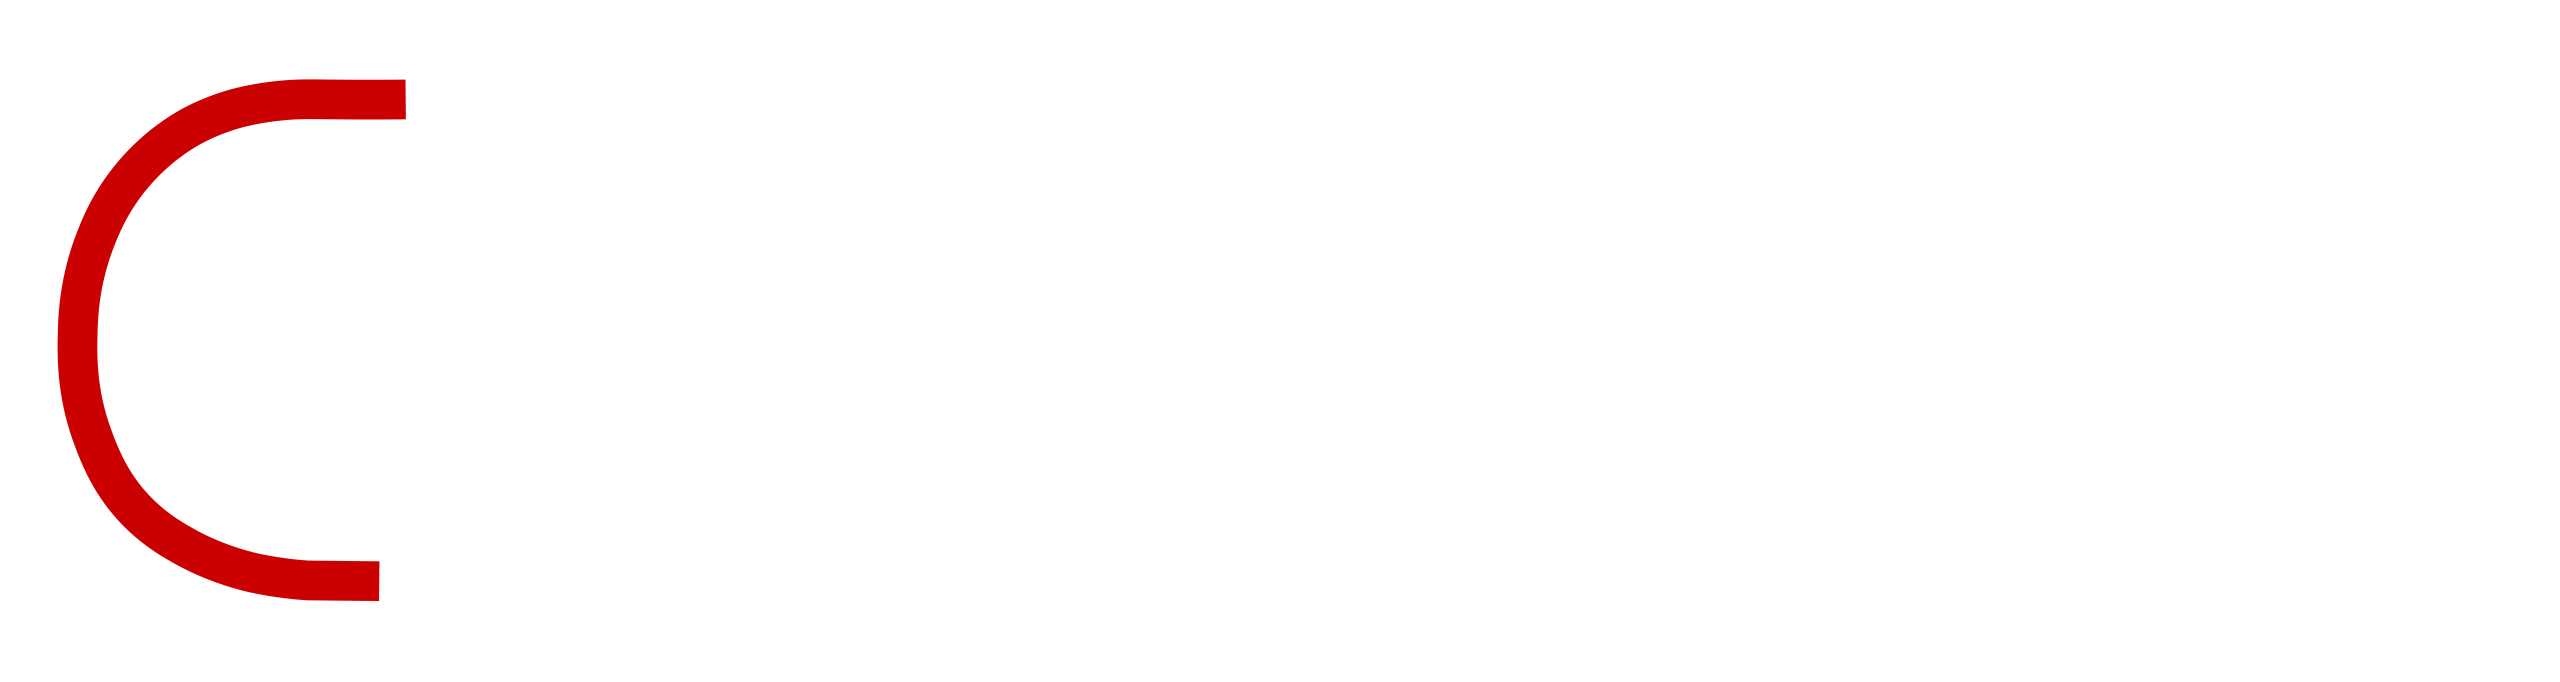 logo ciweld